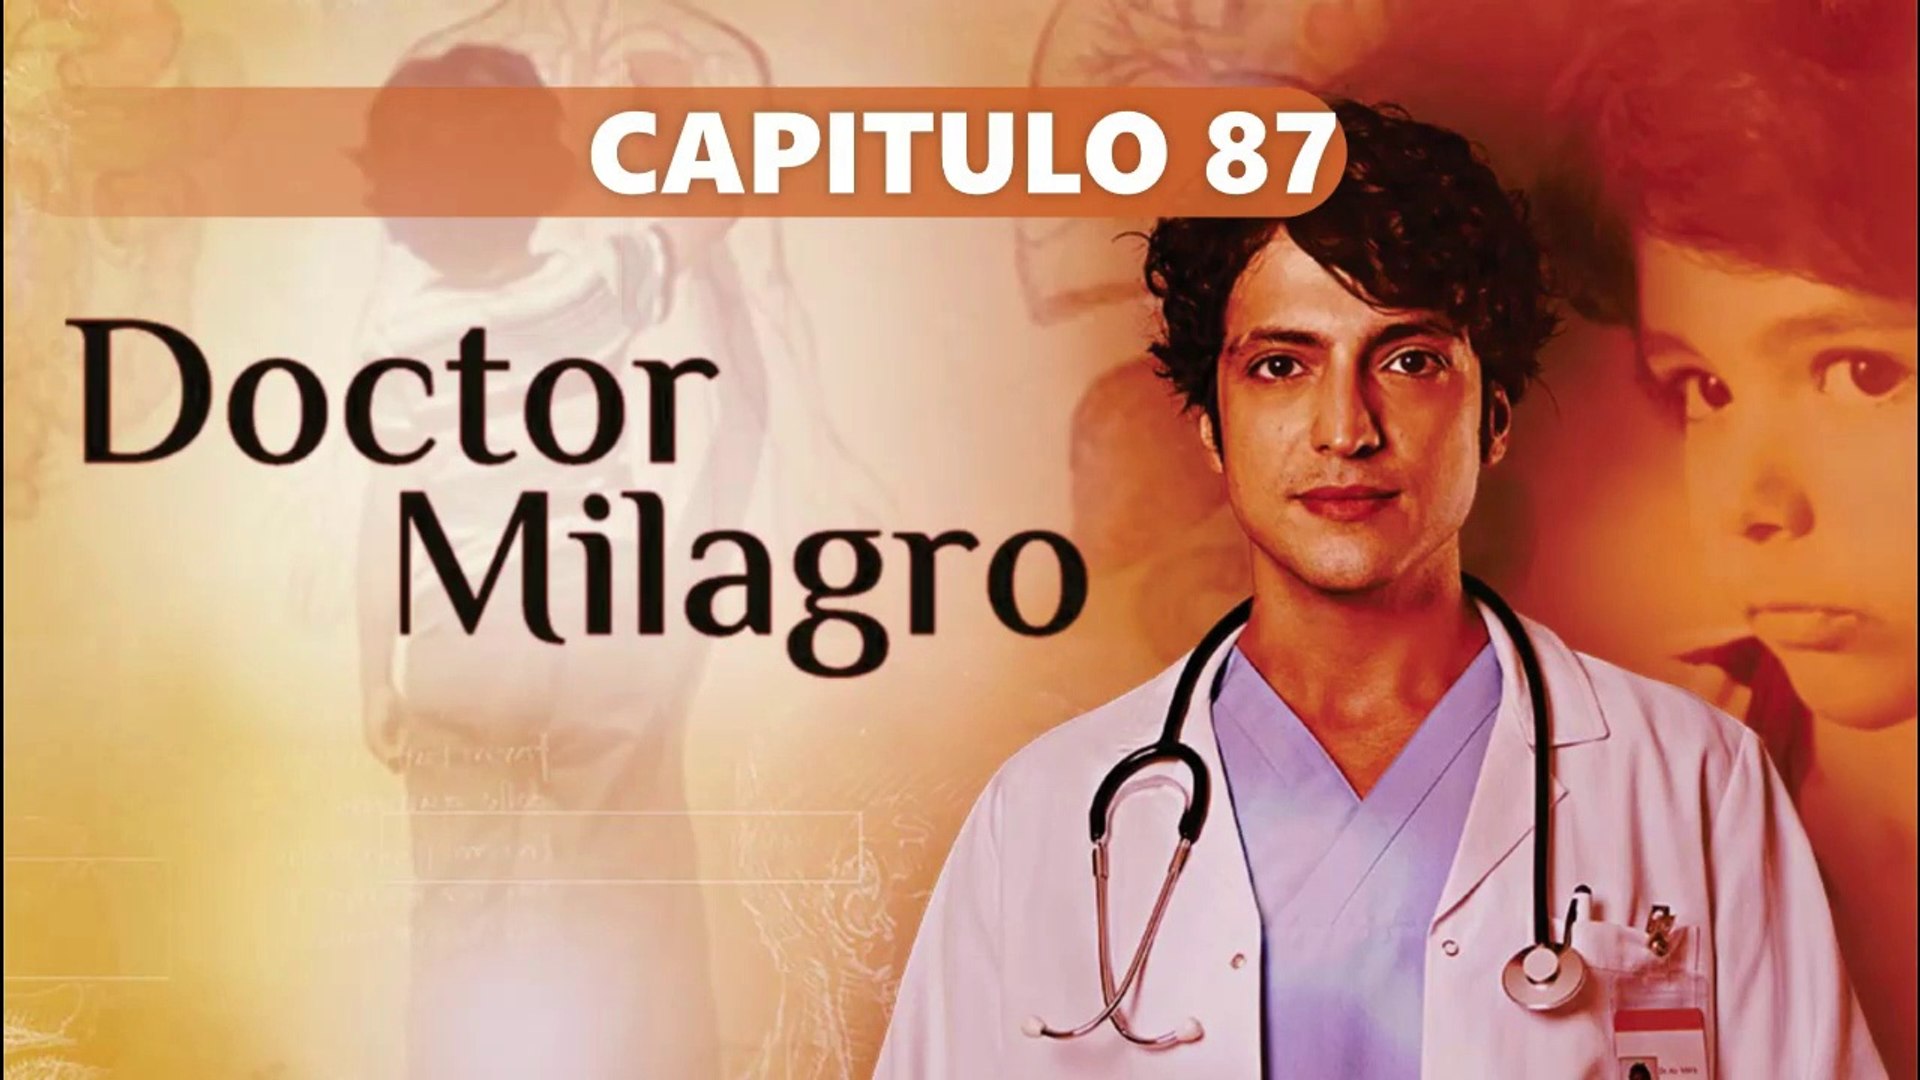 DOCTOR MILAGRO CAPITULO 87 ESPAÑOL ❤| COMPLETO HD - Vídeo Dailymotion